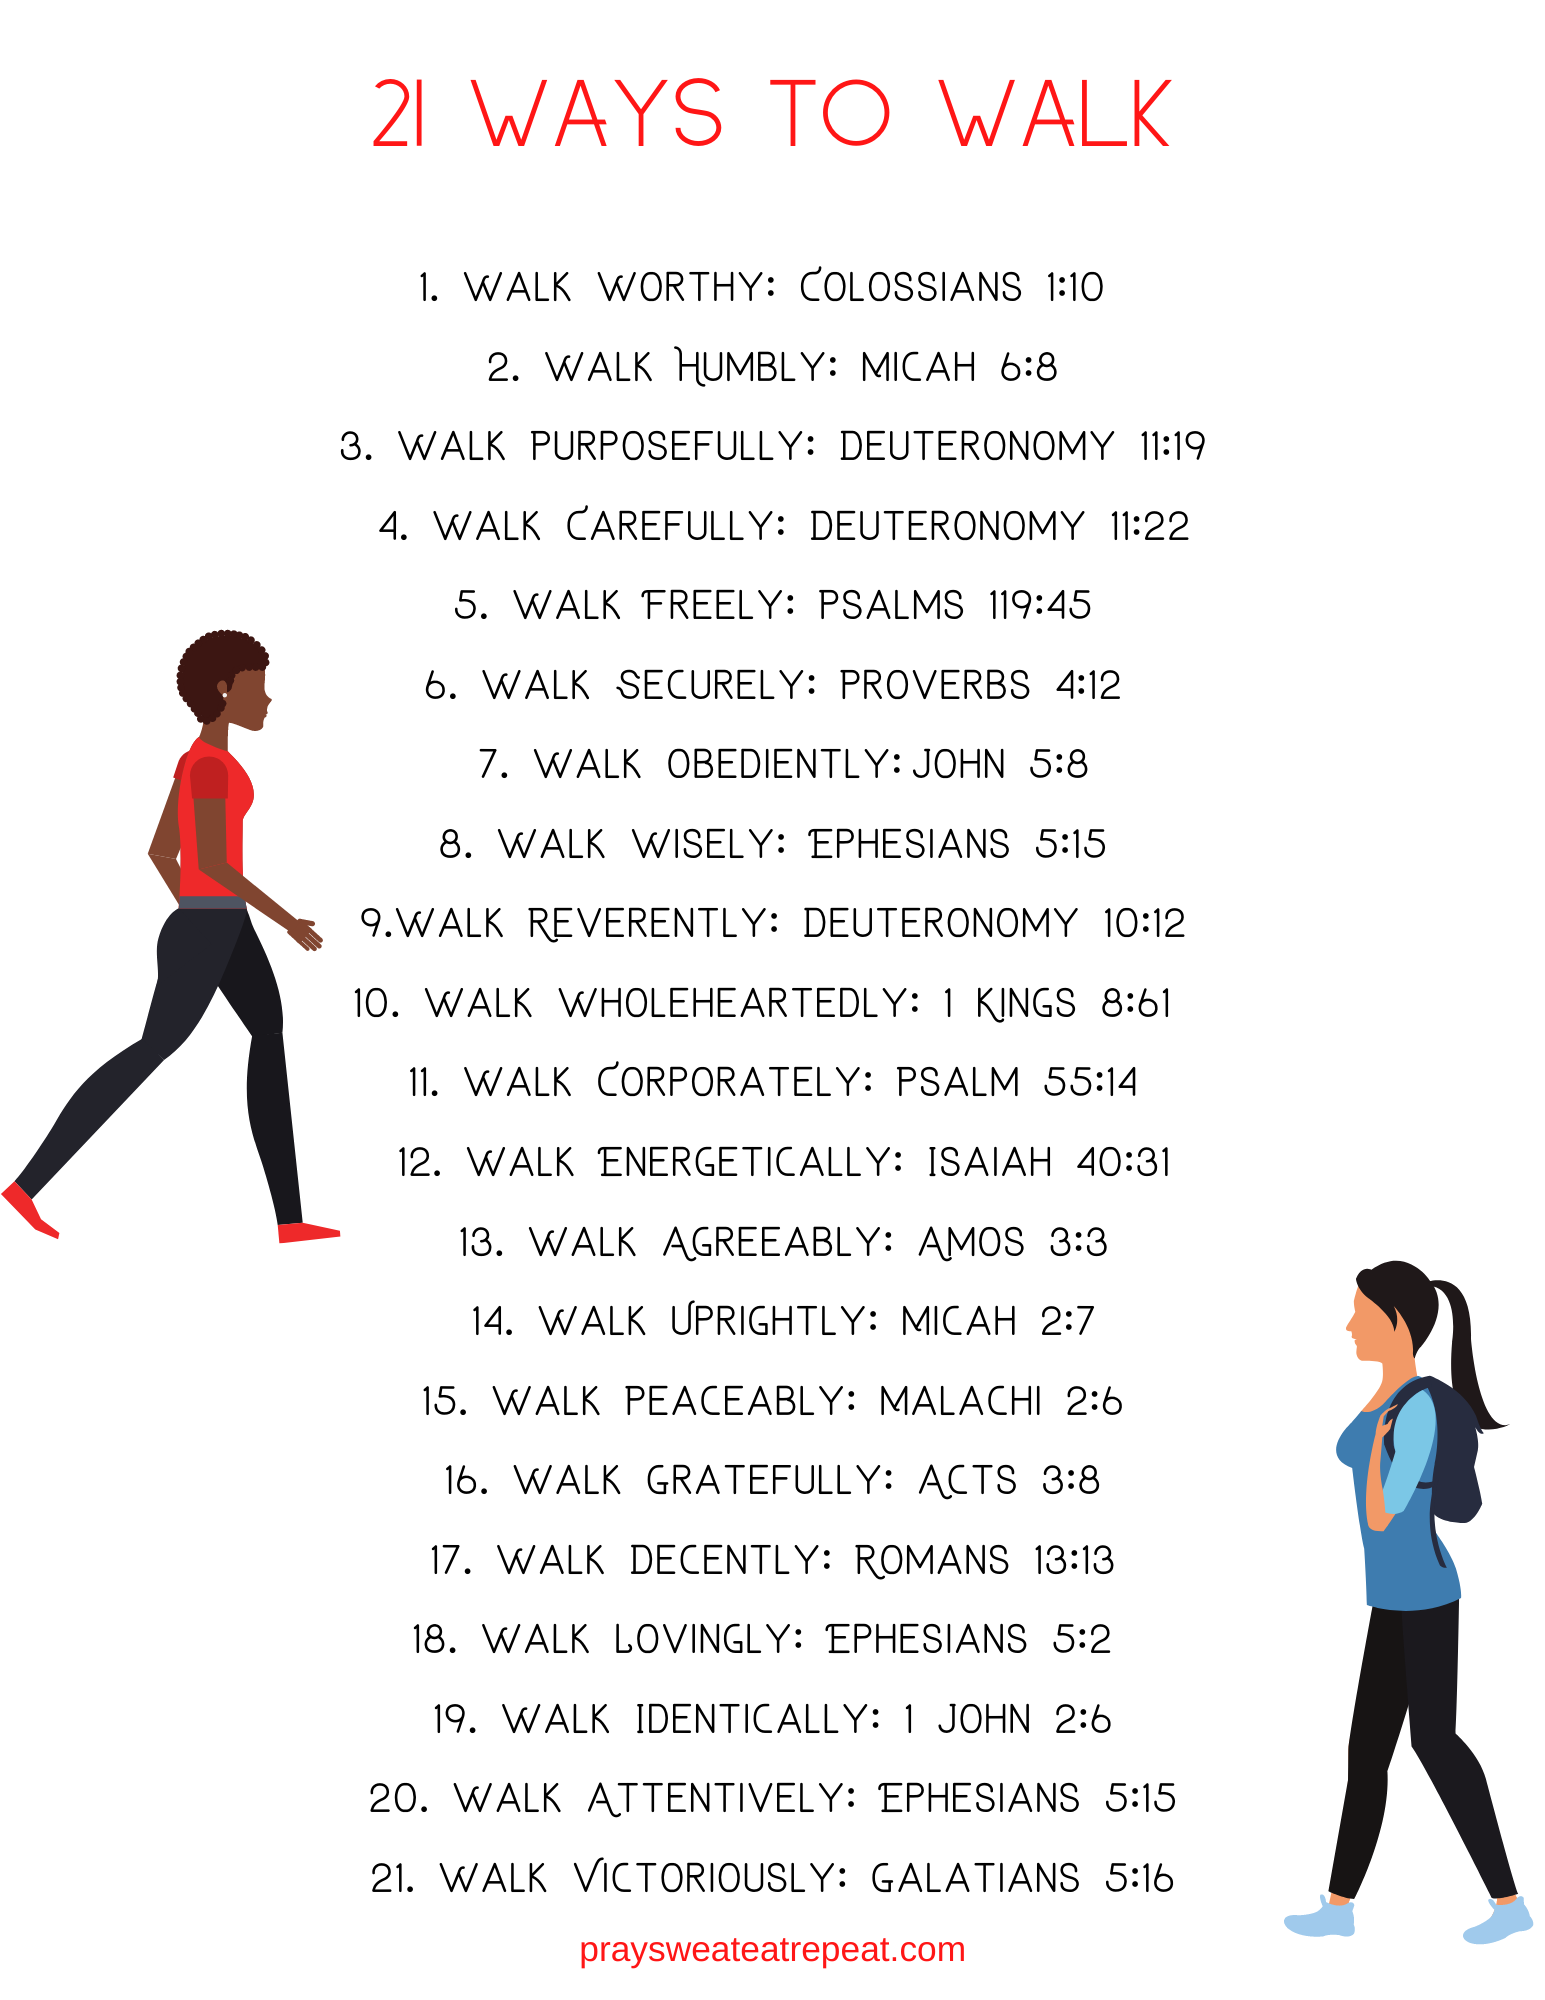 21 Ways to Walk